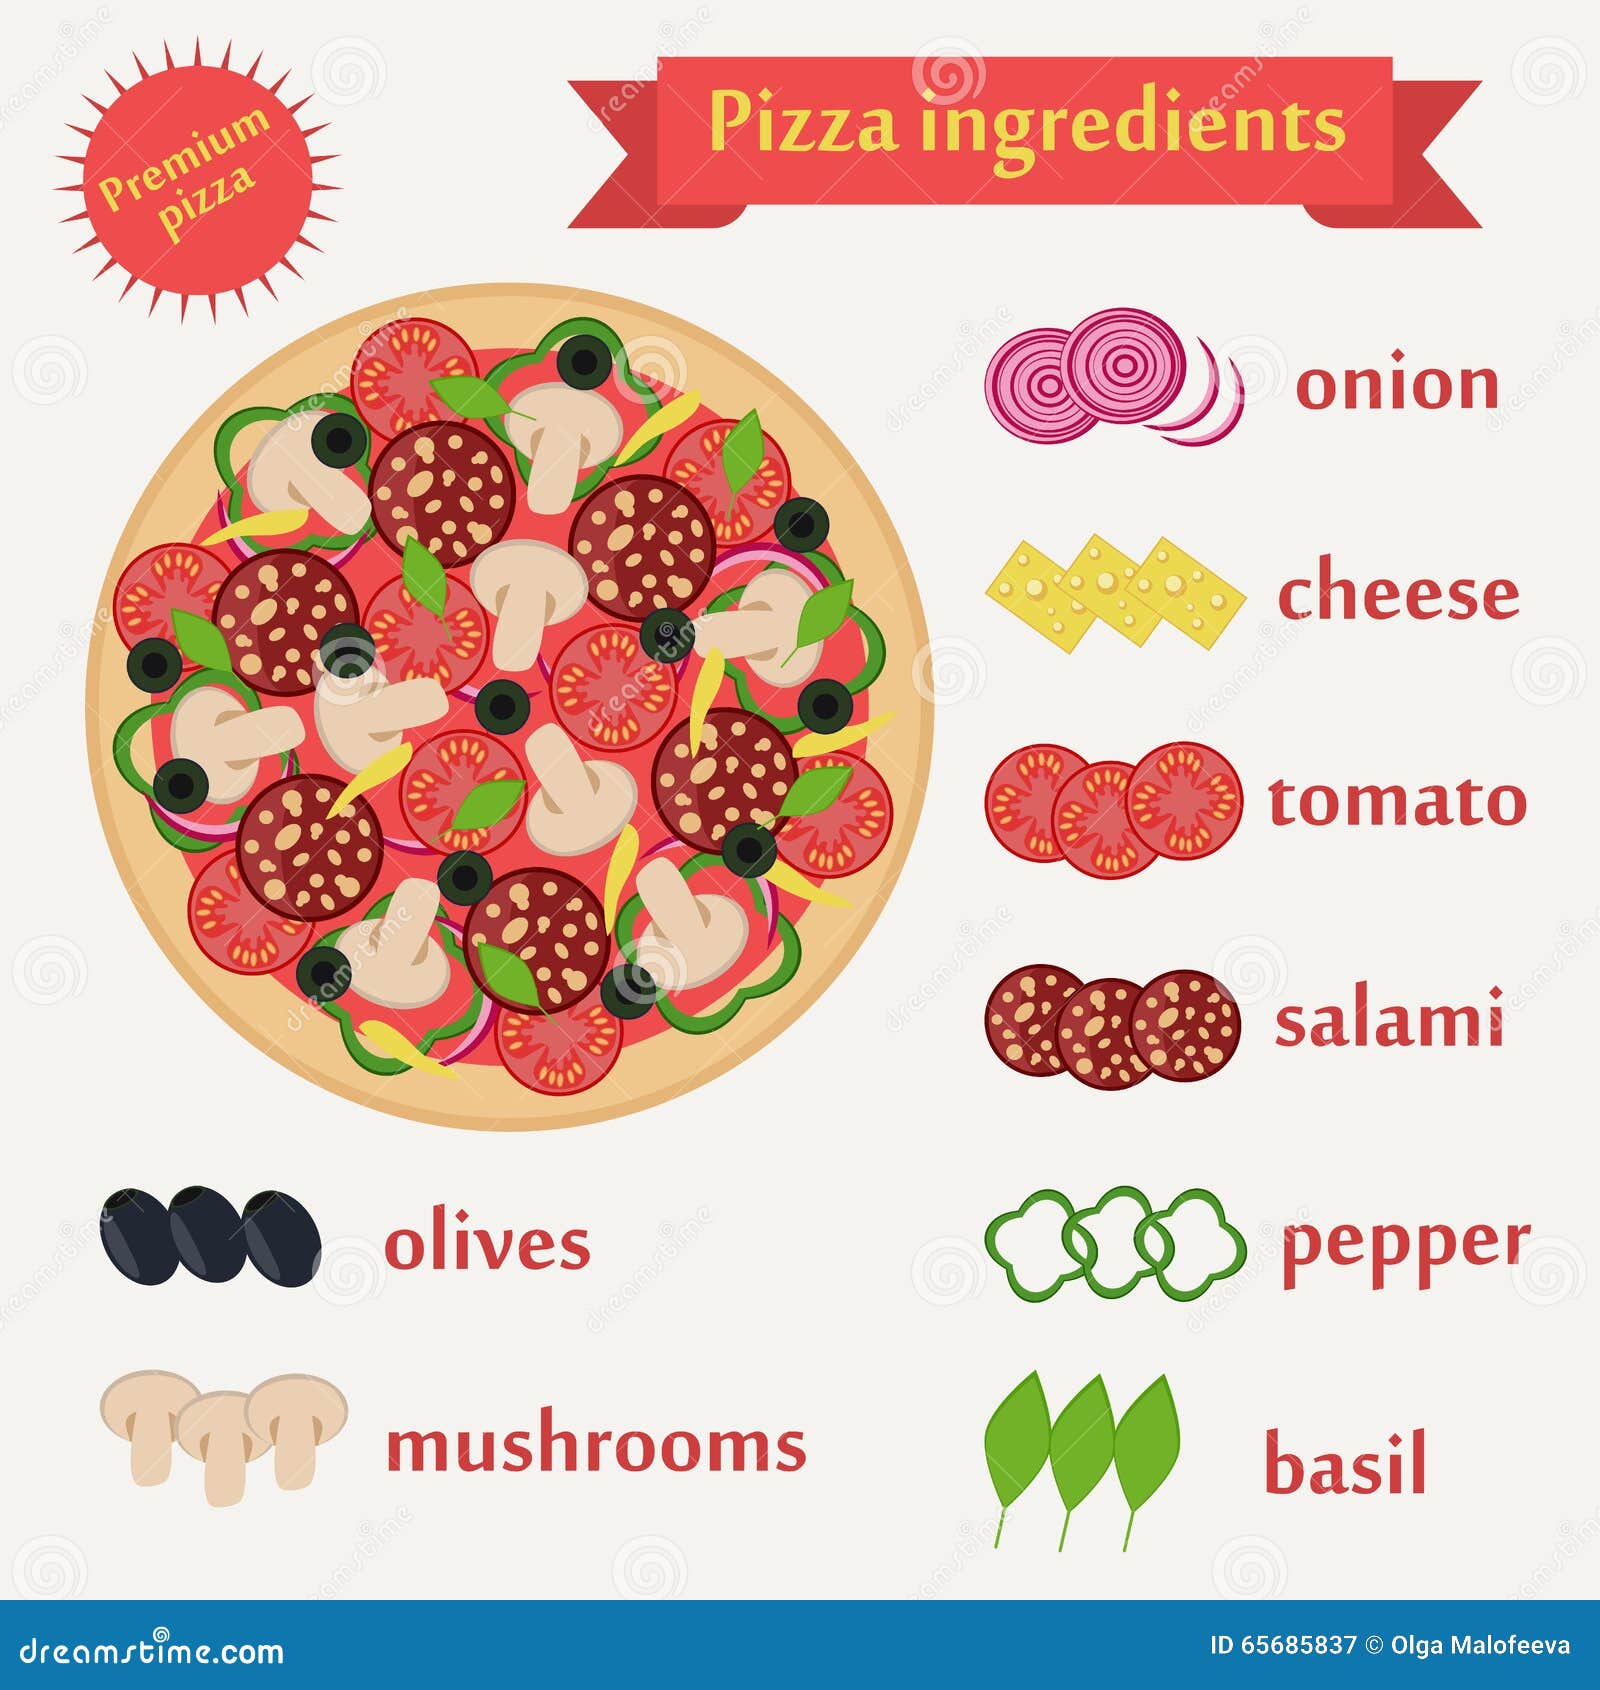 тесто для пиццы перевод на английский фото 6